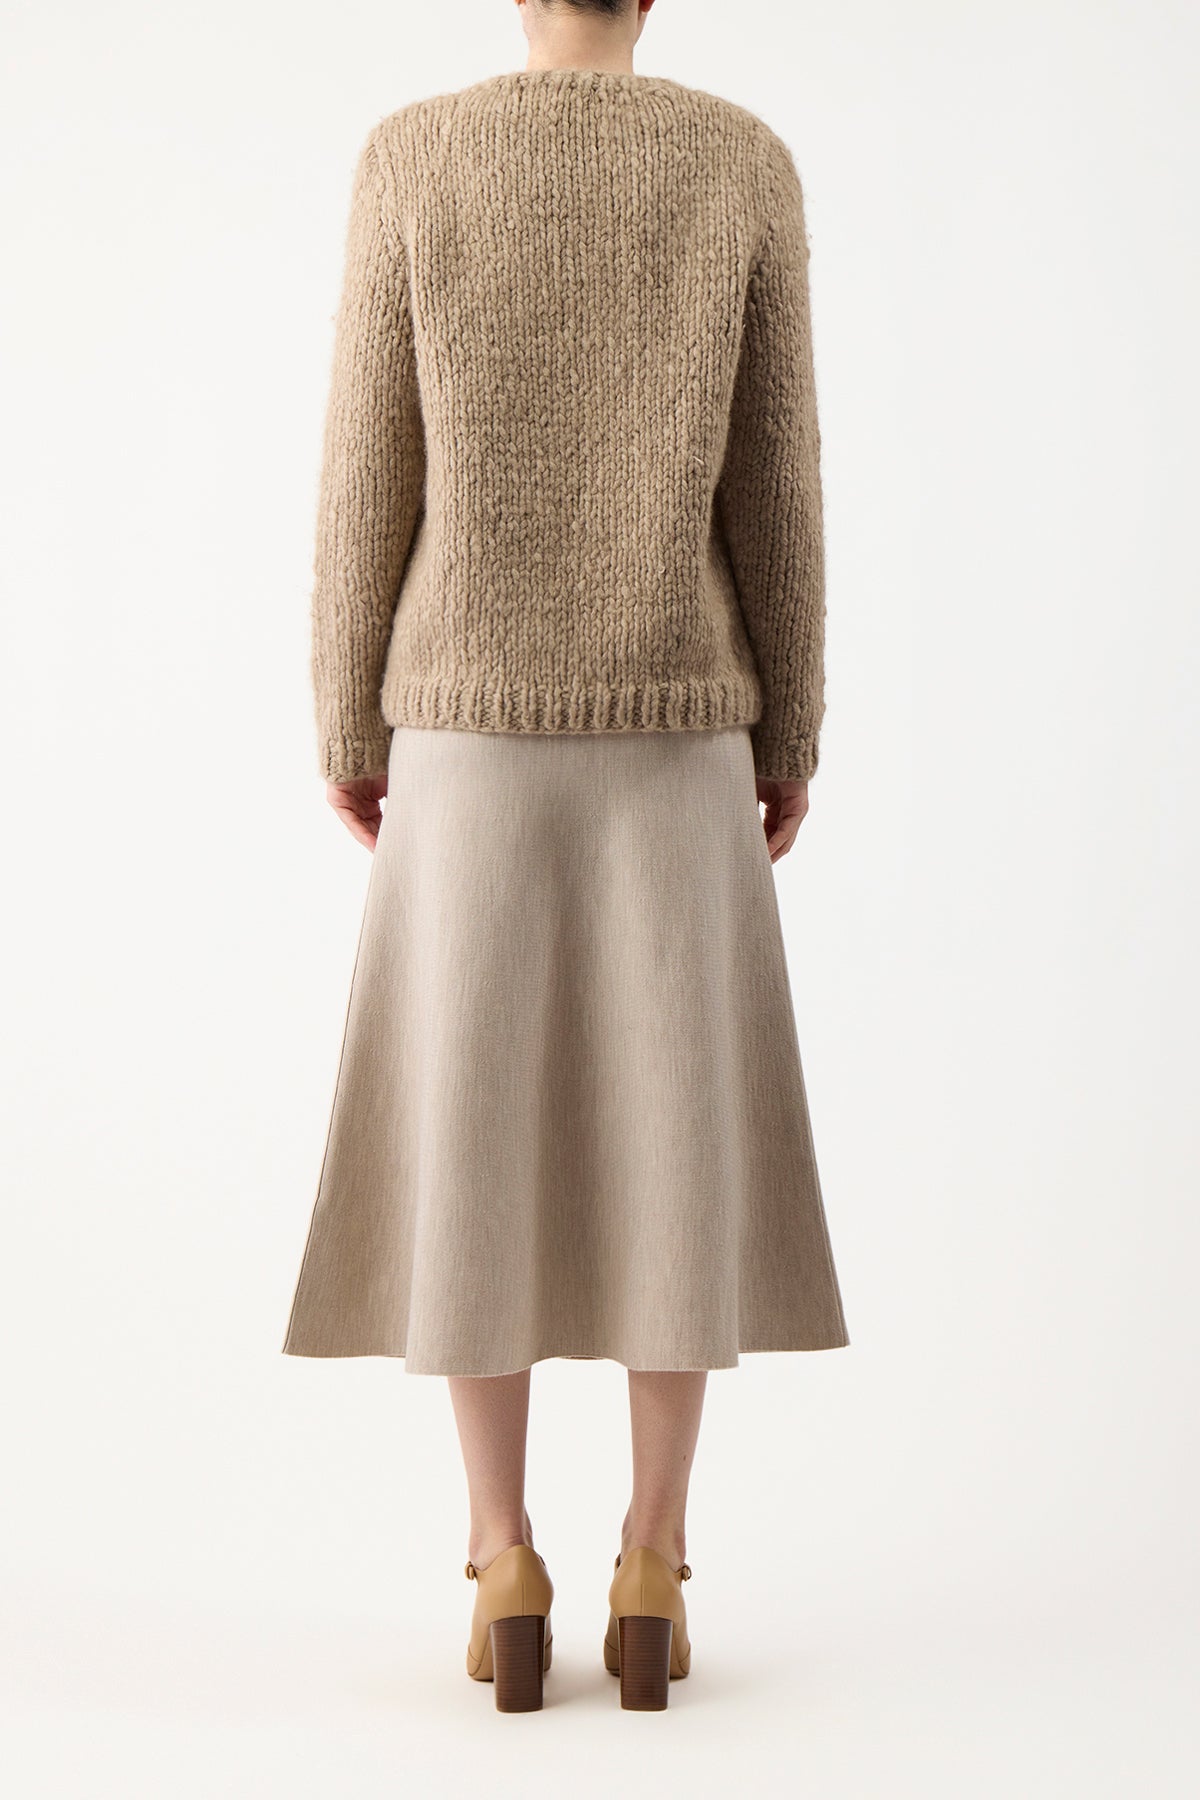 Freddie Knit Skirt in Oatmeal Cashmere Wool